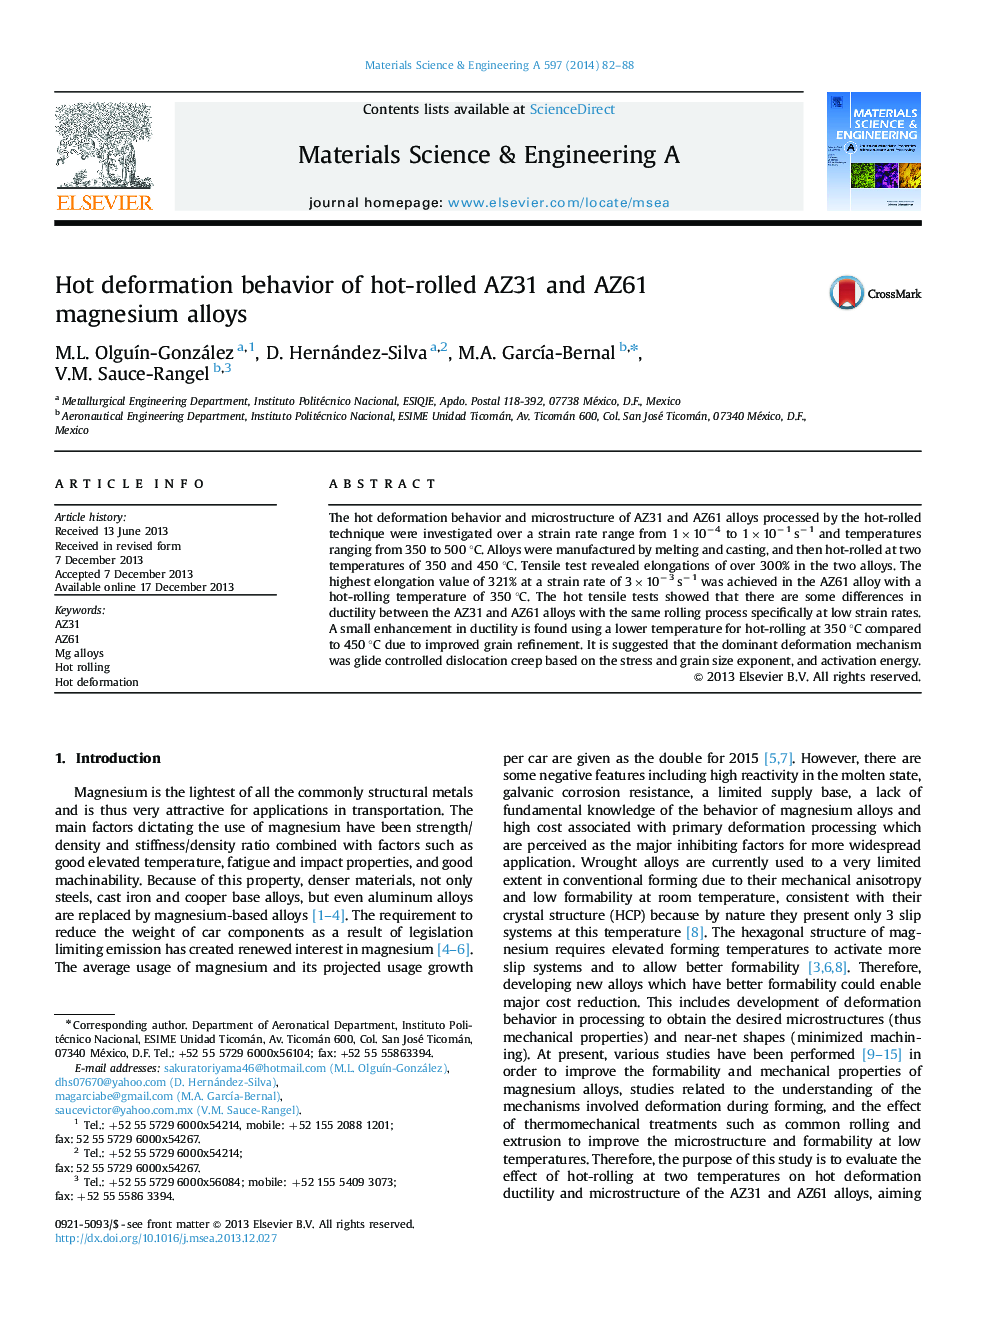 Hot deformation behavior of hot-rolled AZ31 and AZ61 magnesium alloys